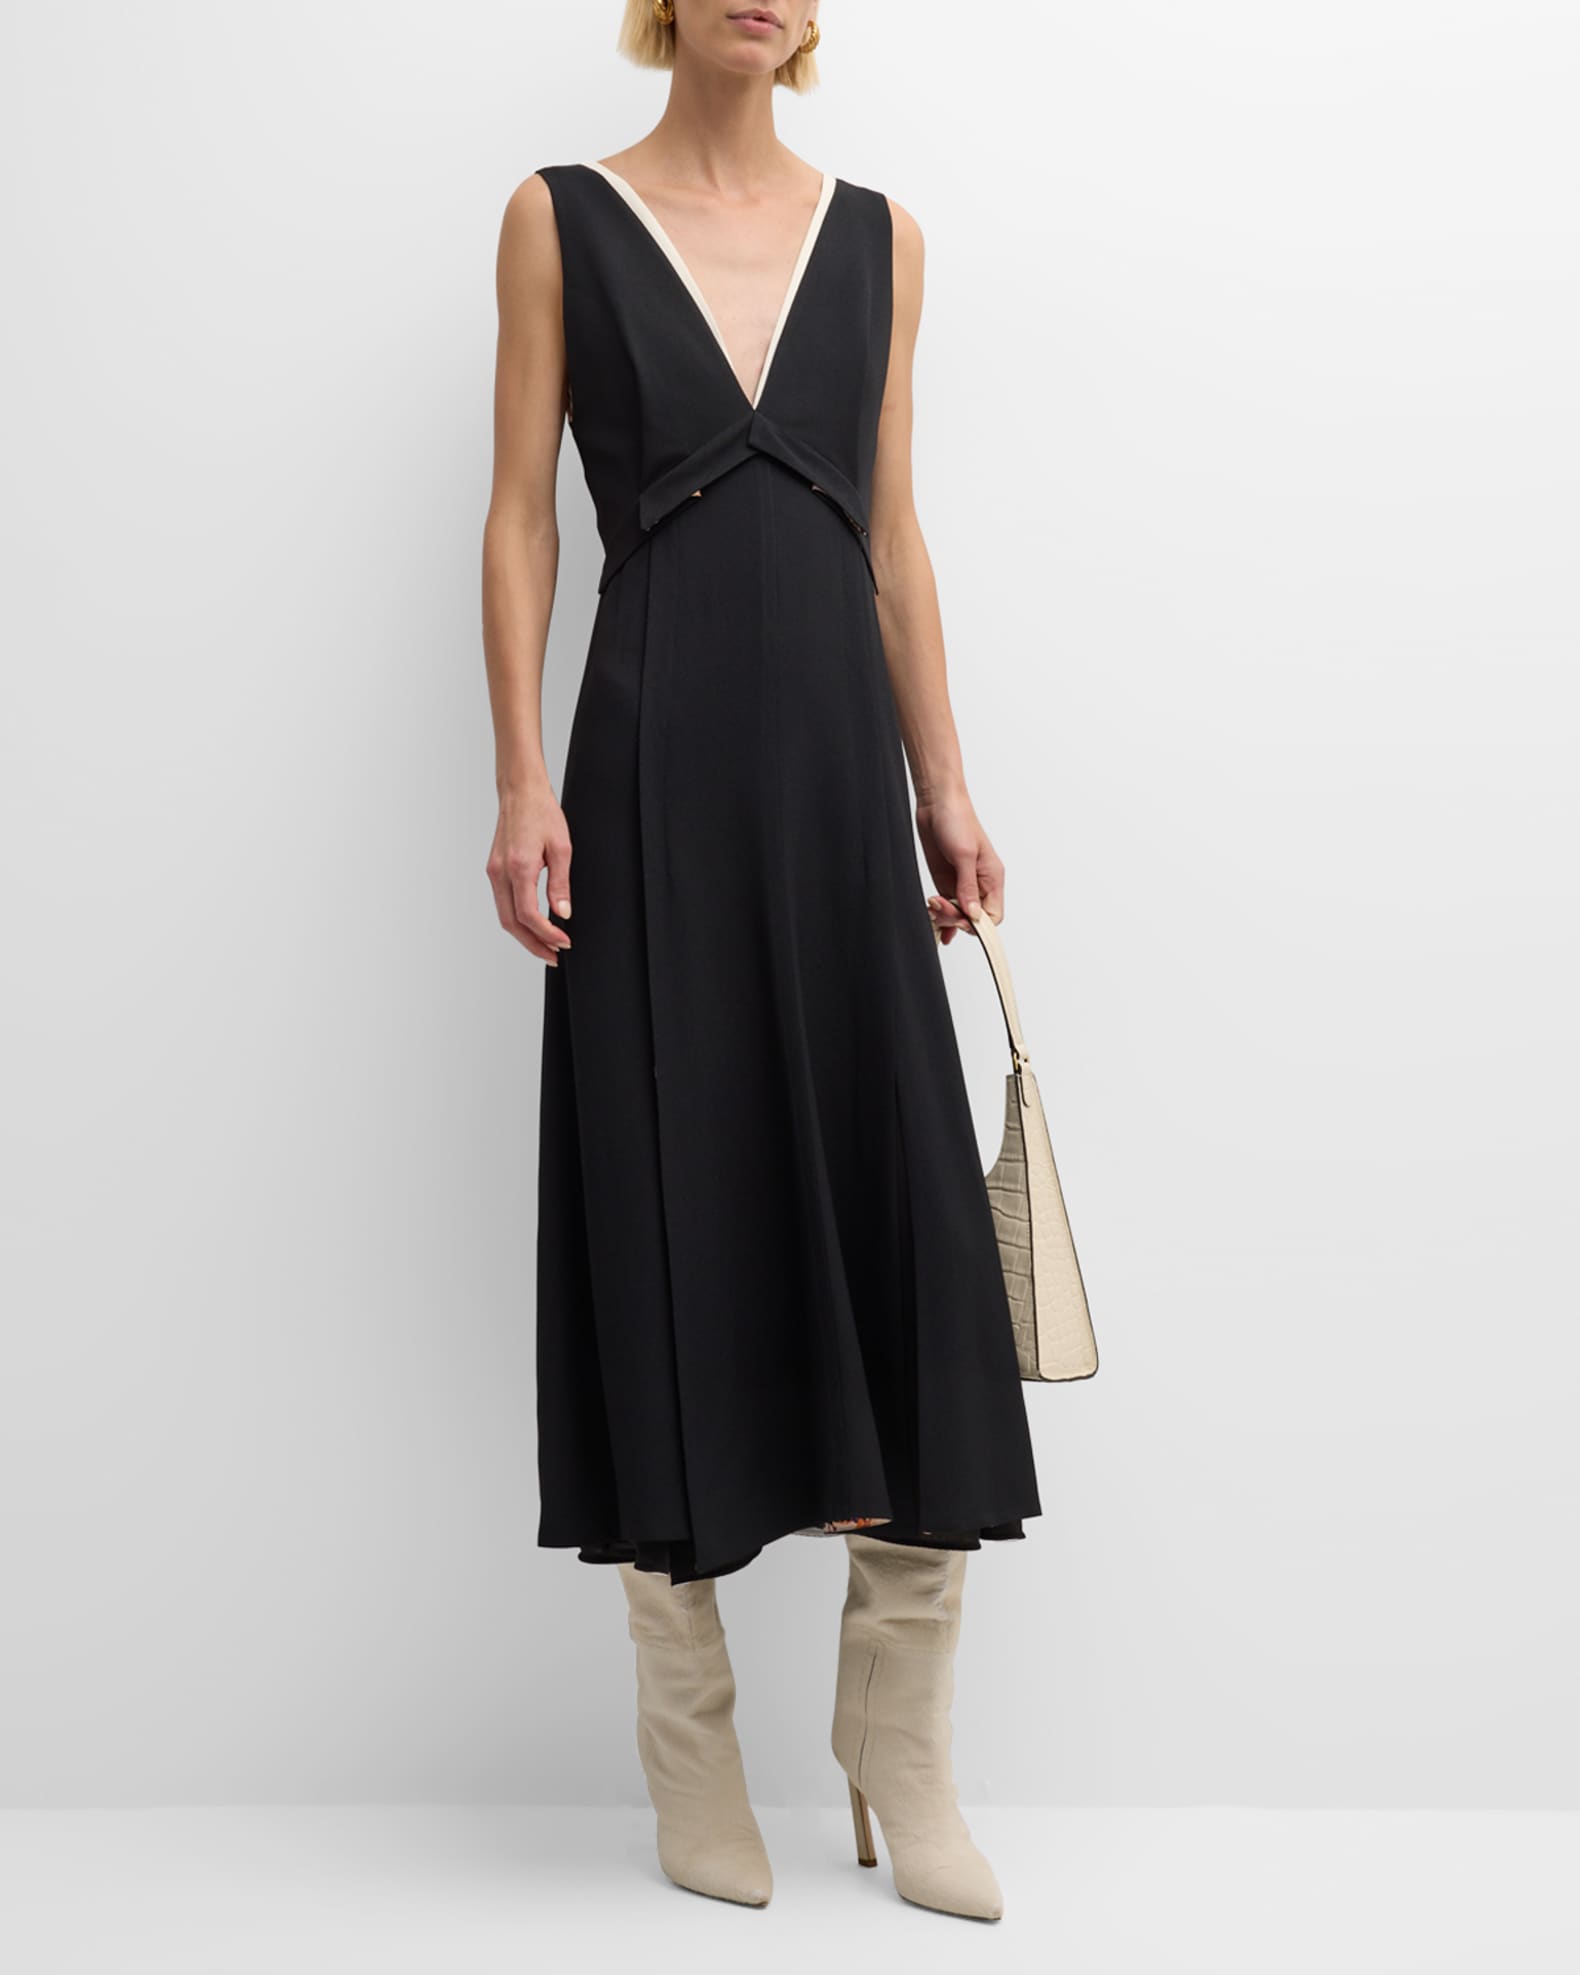 Proenza Schouler Women's Floral Inset Two-Tone Midi-Dress - Black - Size 6